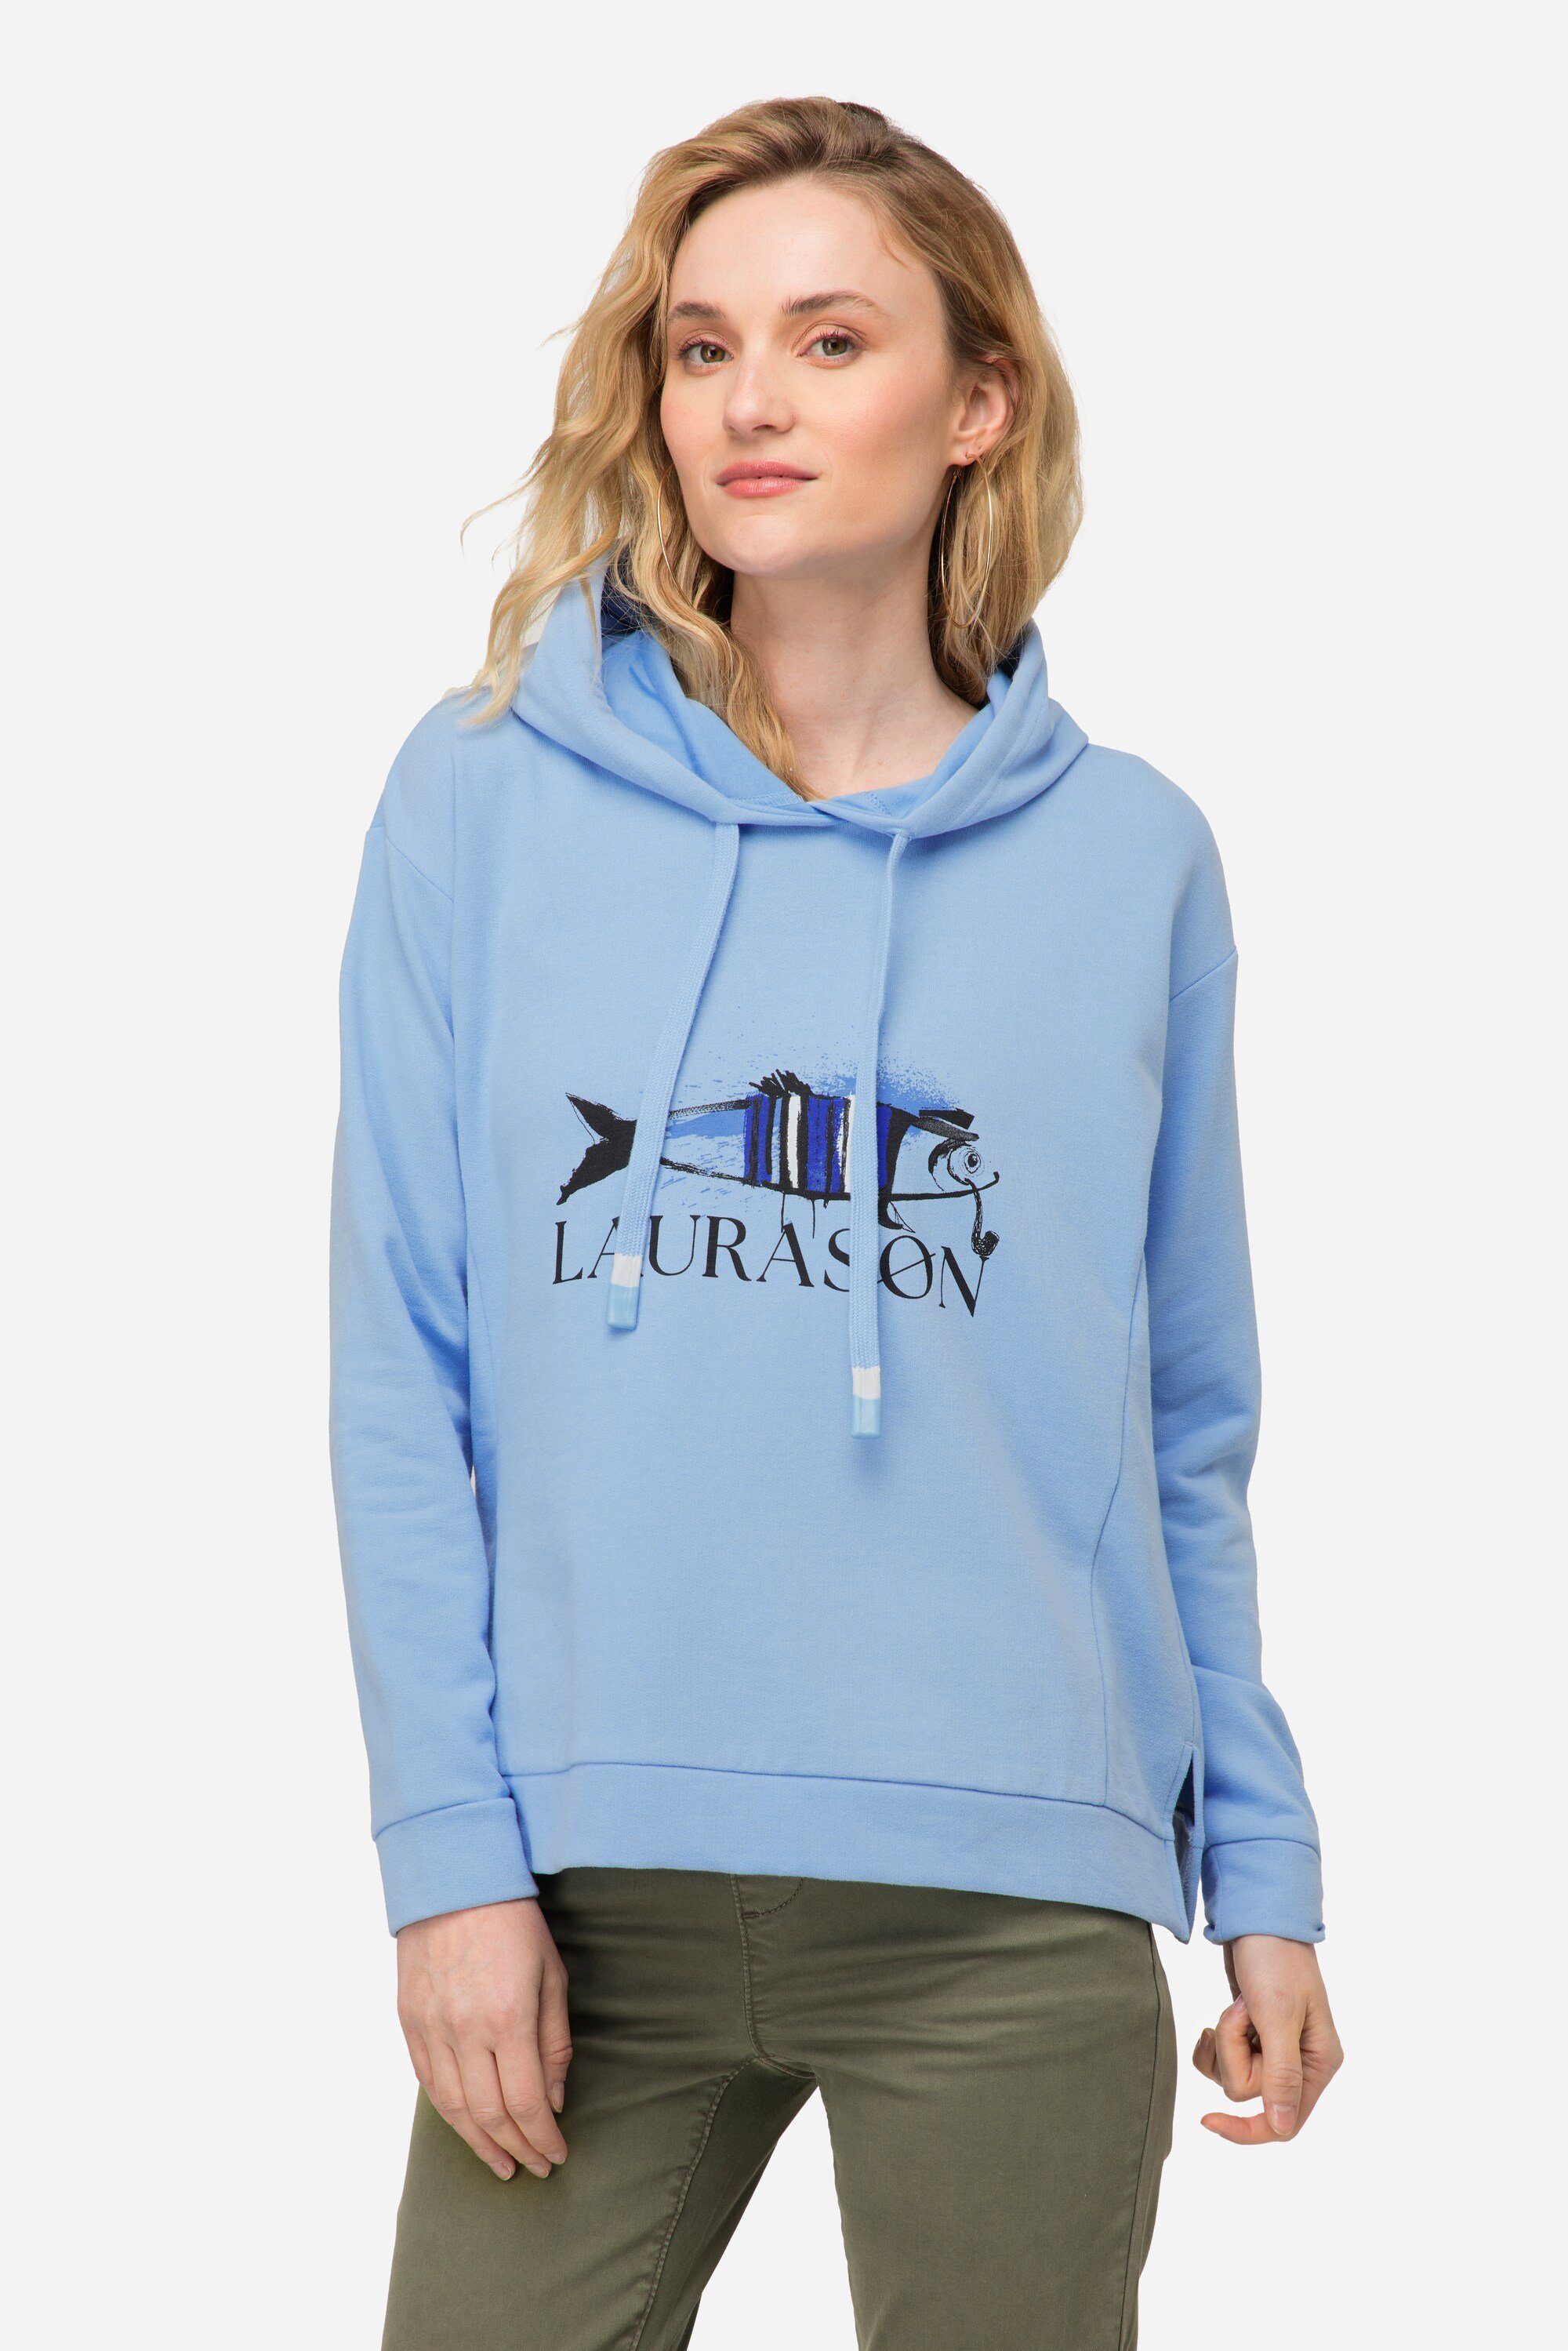 Laurasøn Sweatshirt Hoodie Fisch Motiv Kapuze Langarm eisblau | Sweatshirts